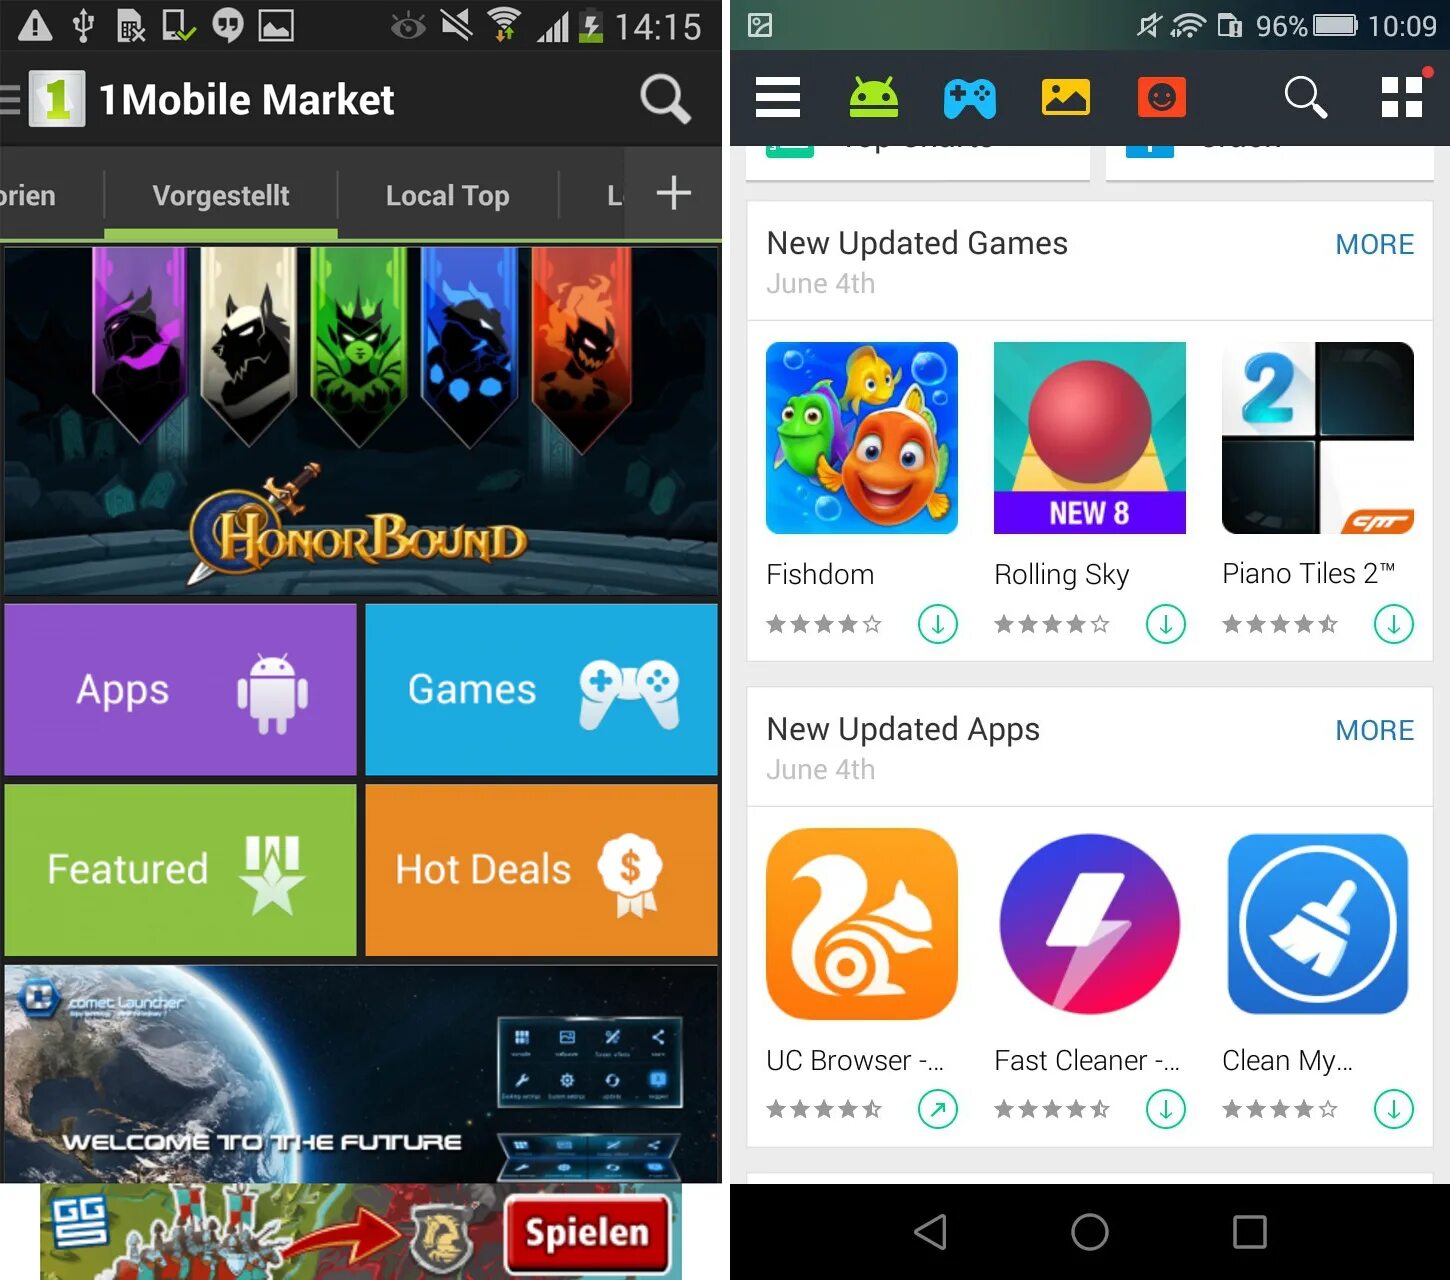 Андроид маркет игры на телефон. Андроид Маркет. 1 Мобильный Маркет. Android Market приложение. Магазин 1 mobile.